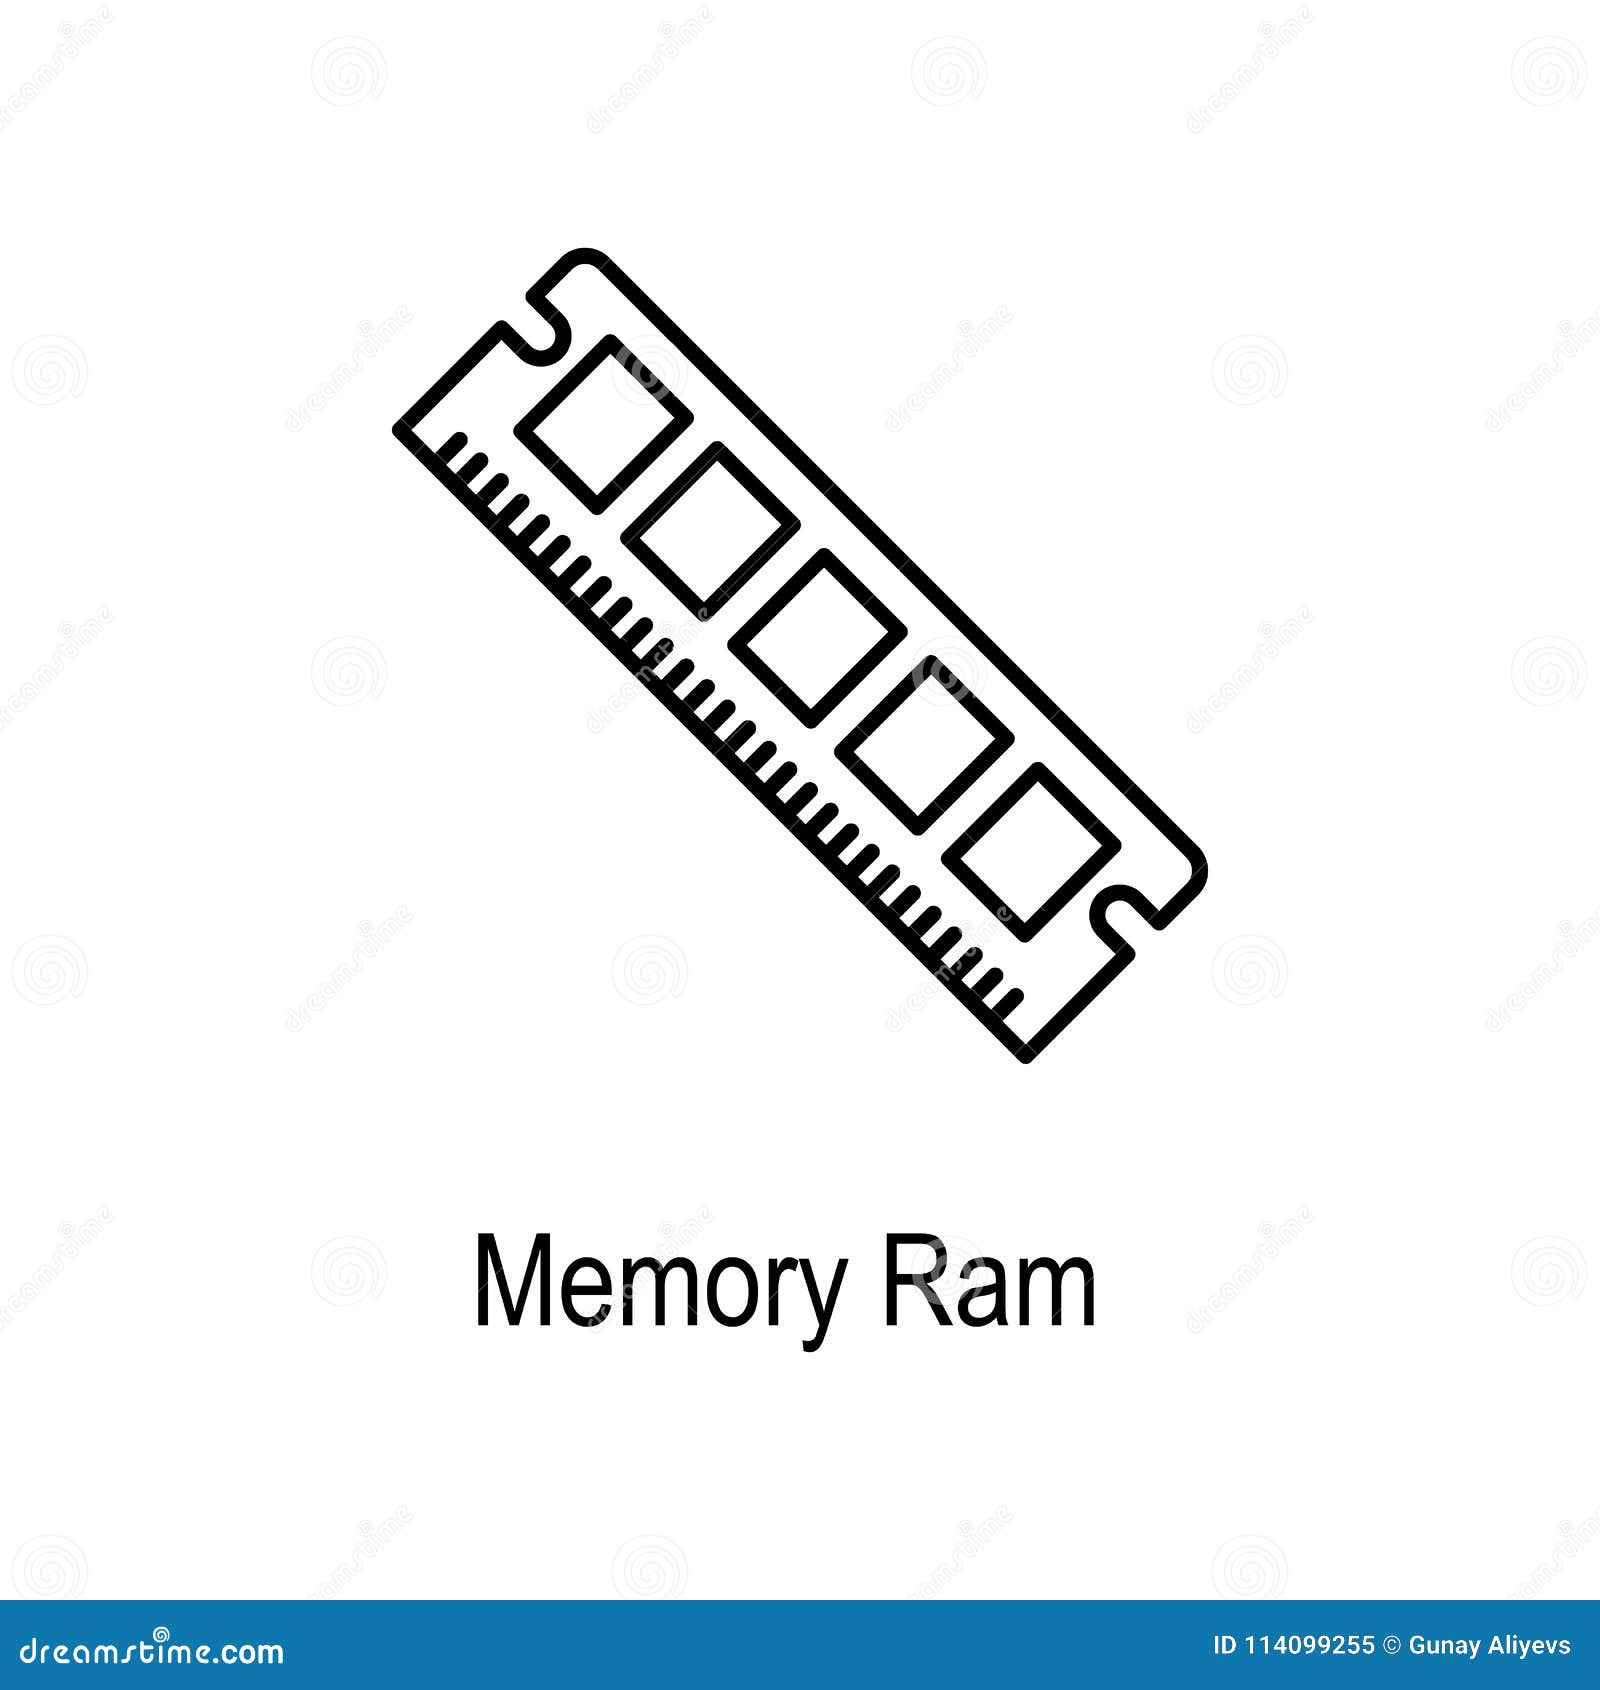 Computer Ram Stock Illustrations  7079 Computer Ram Stock Illustrations  Vectors  Clipart  Dreamstime